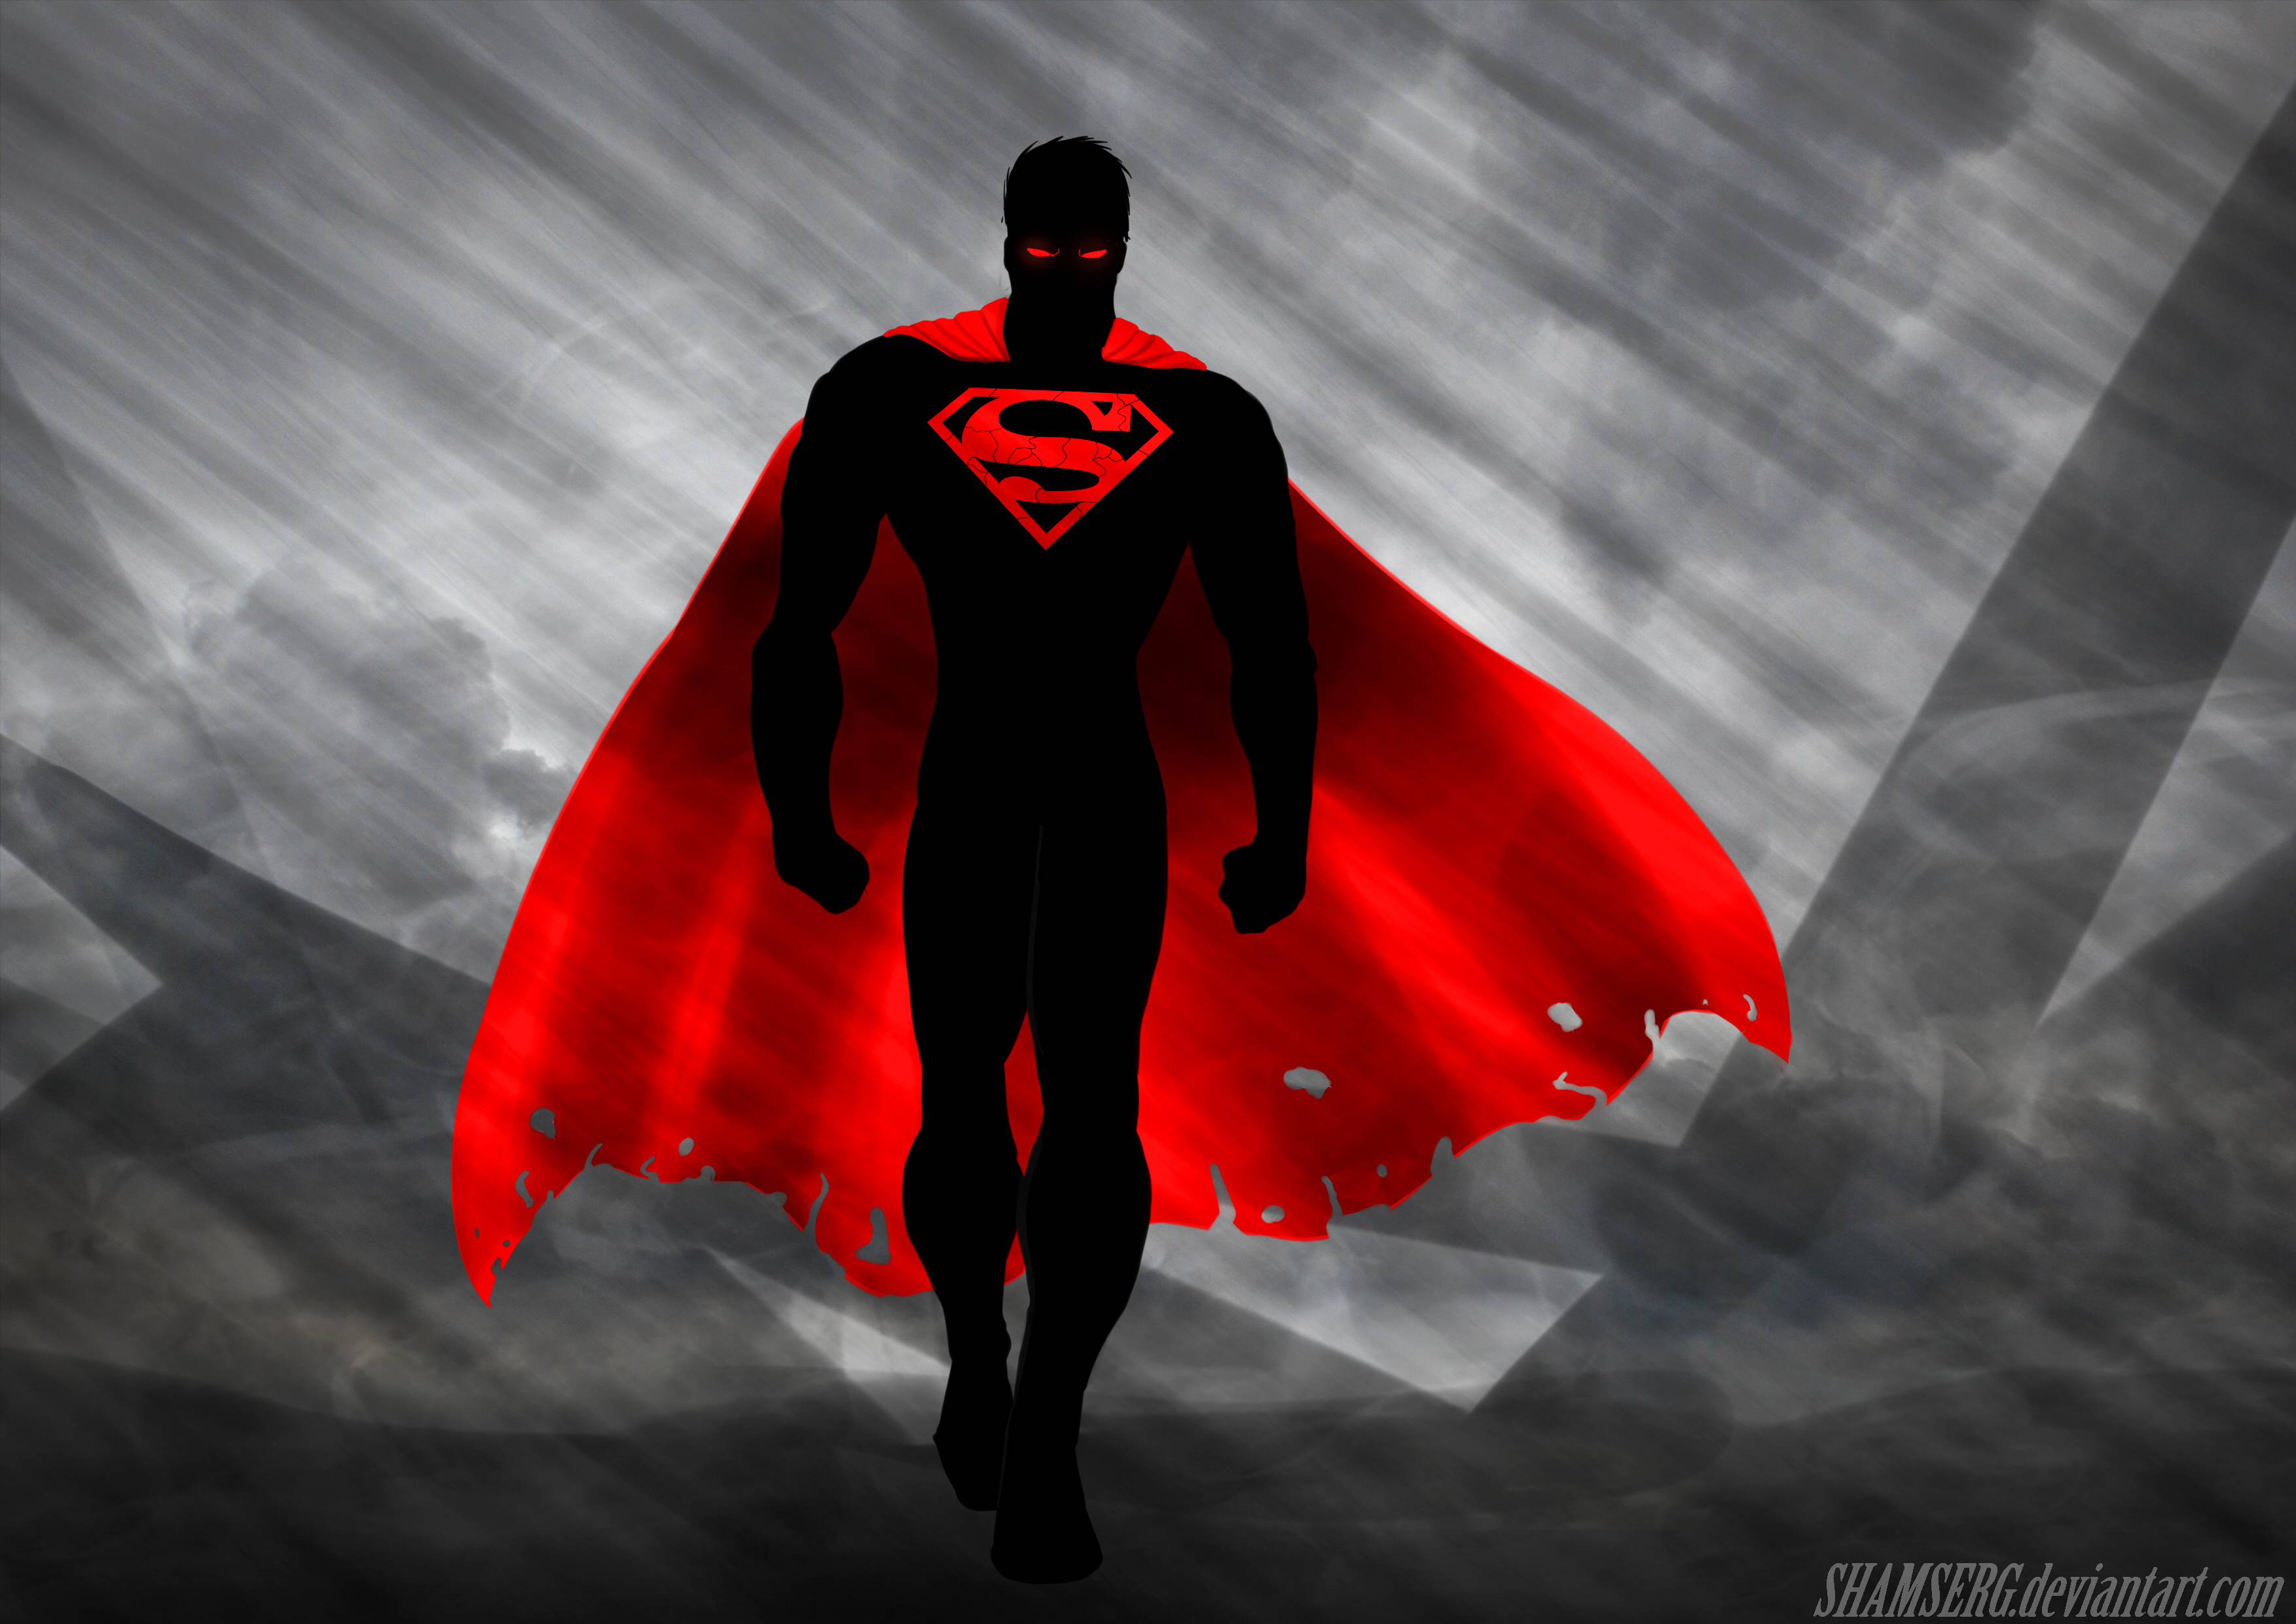 Superman Wallpaper Free Superman Background